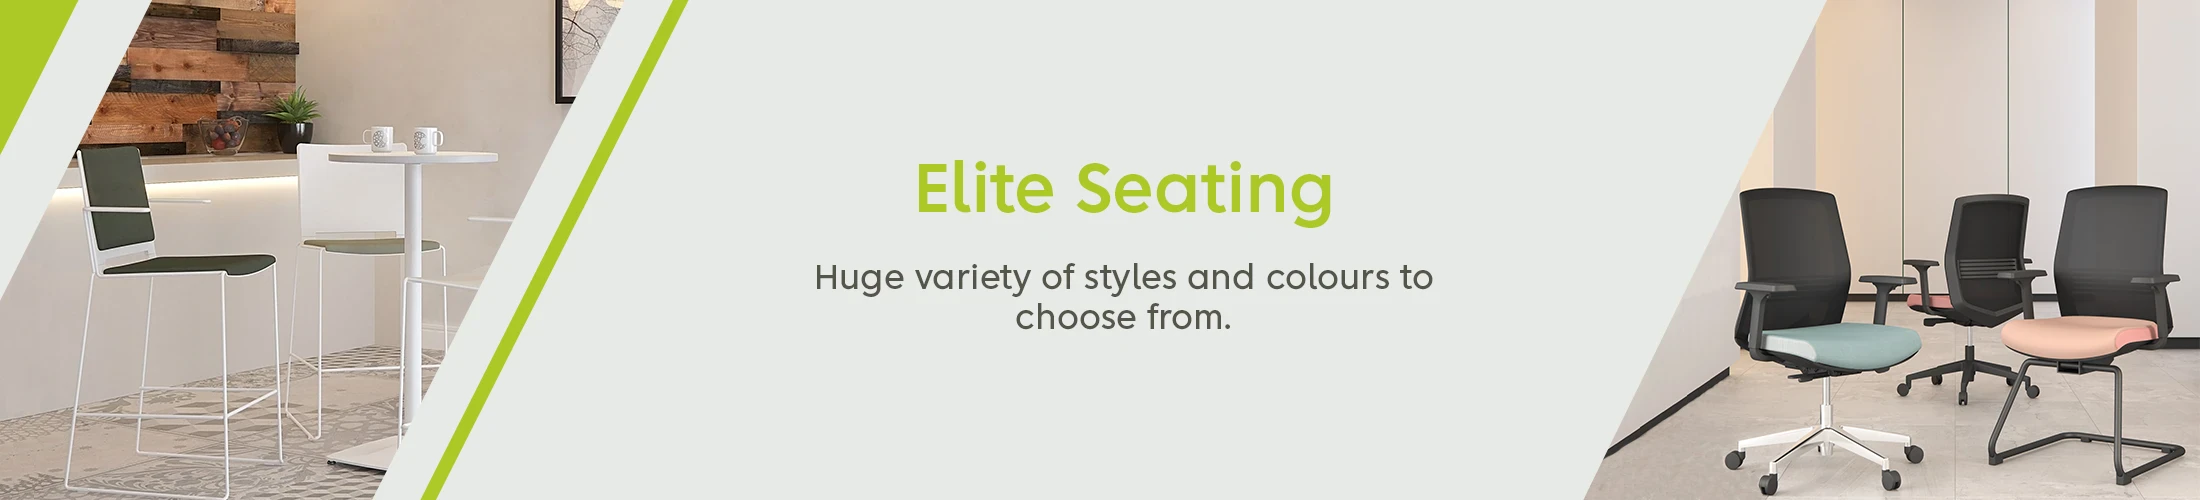 Elite seating banner